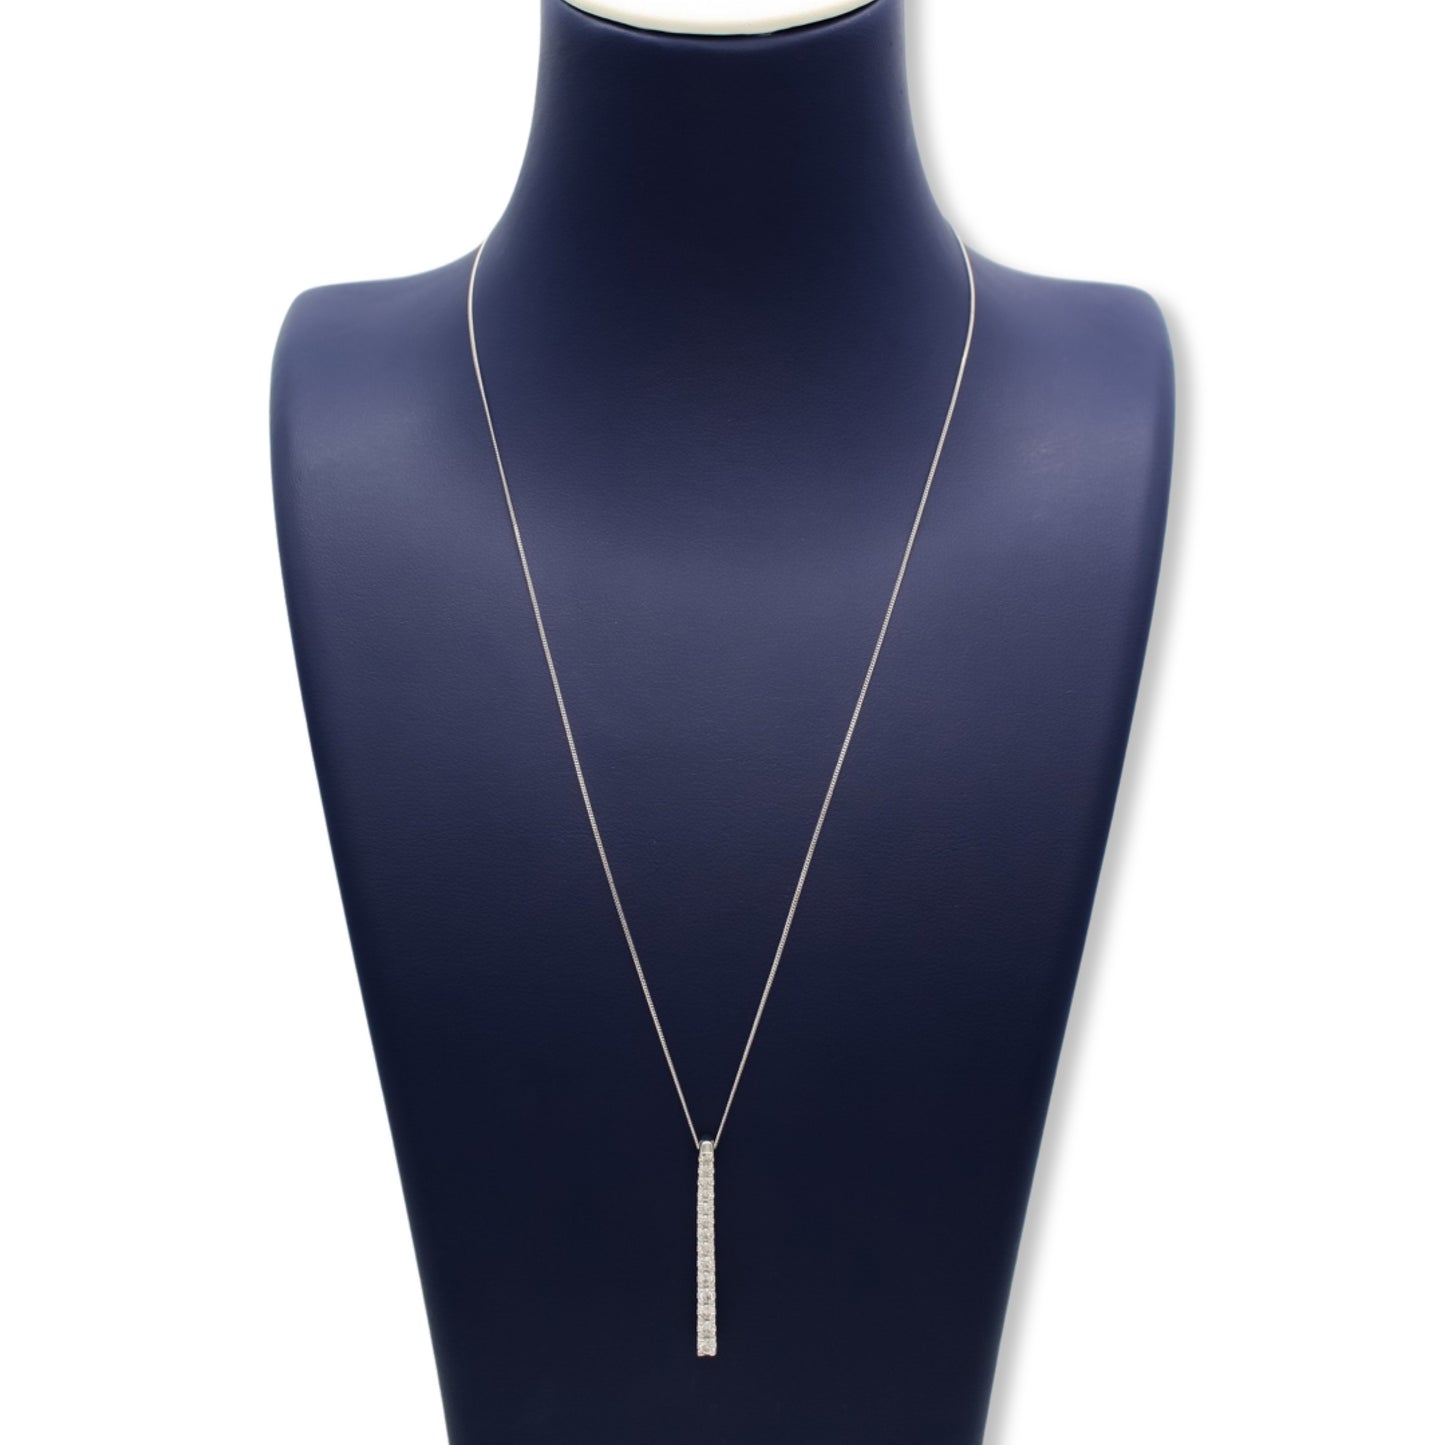 Women’s Diamond Charm Necklace In 14K White Gold